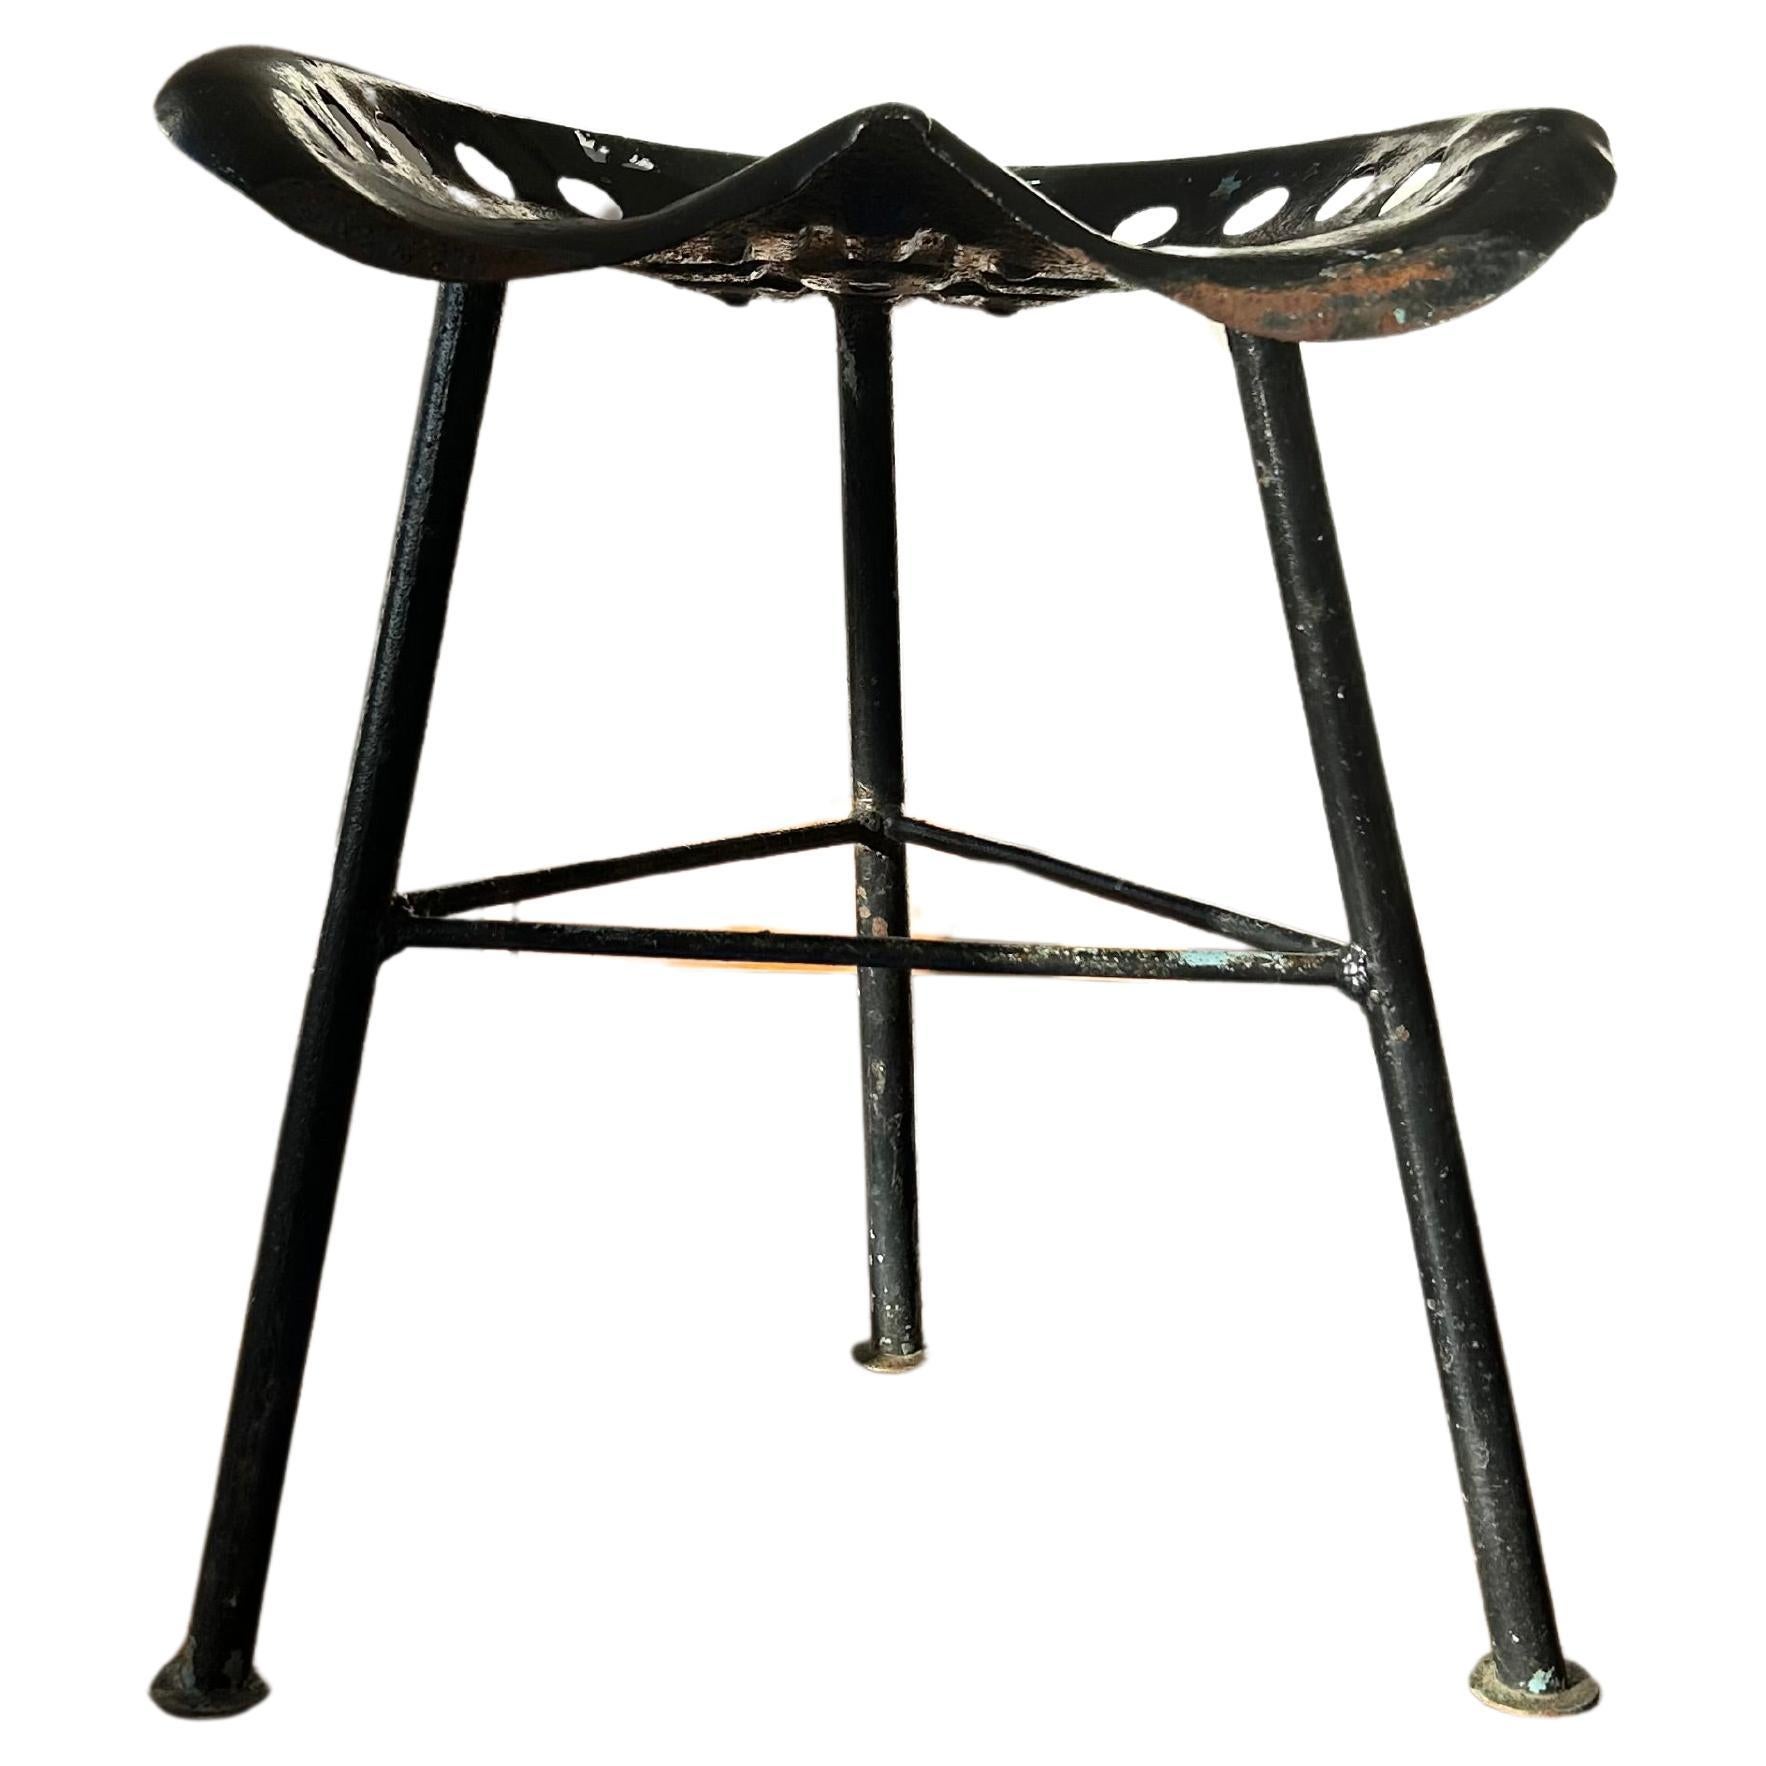 Prototype of a Mogens Lassen stool in lacquered metal, Denmark 1930’s